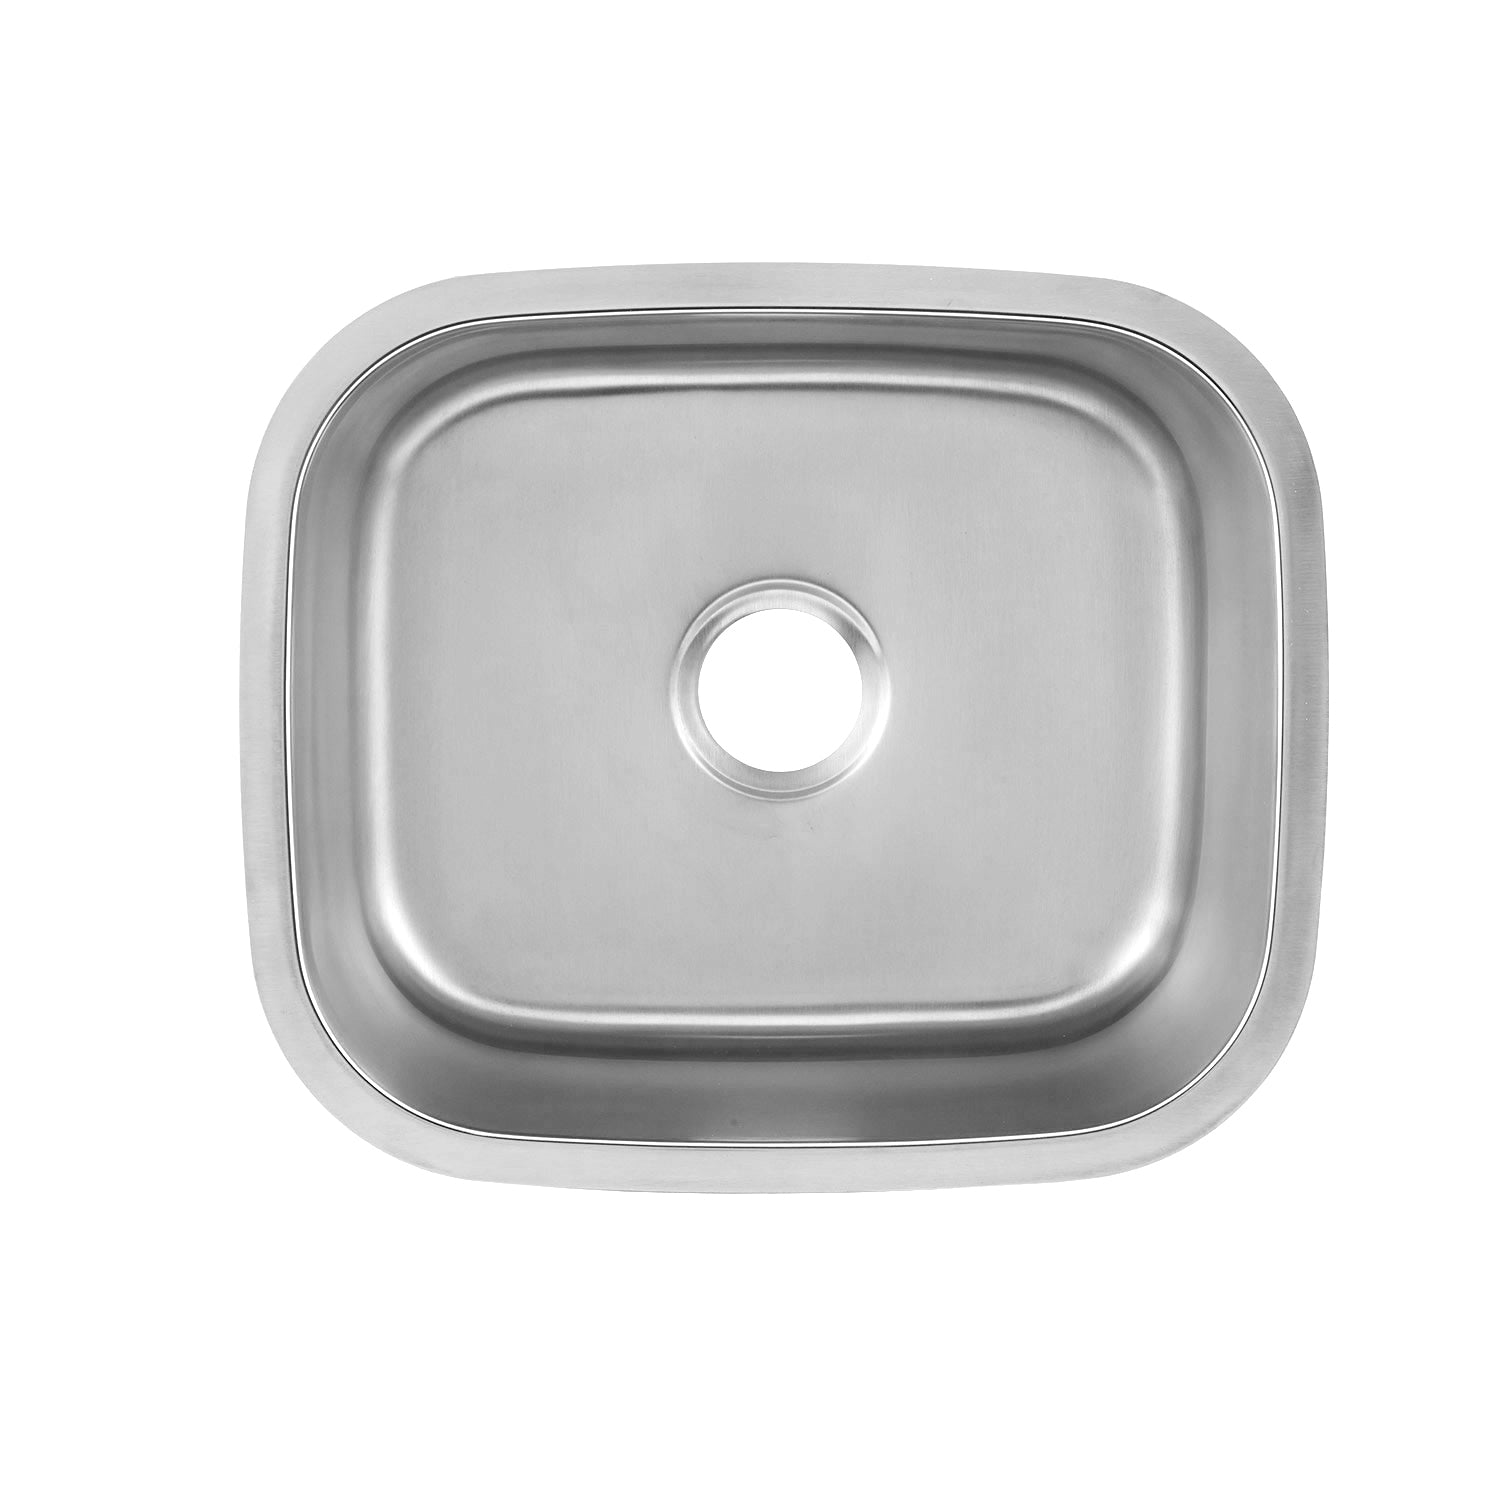 DAX Single Bowl Undermount Kitchen Sink, 18 Gauge Stainless Steel, Brushed Finish , 20-3/4 x 17-3/4 x 9  (DAX-1720)